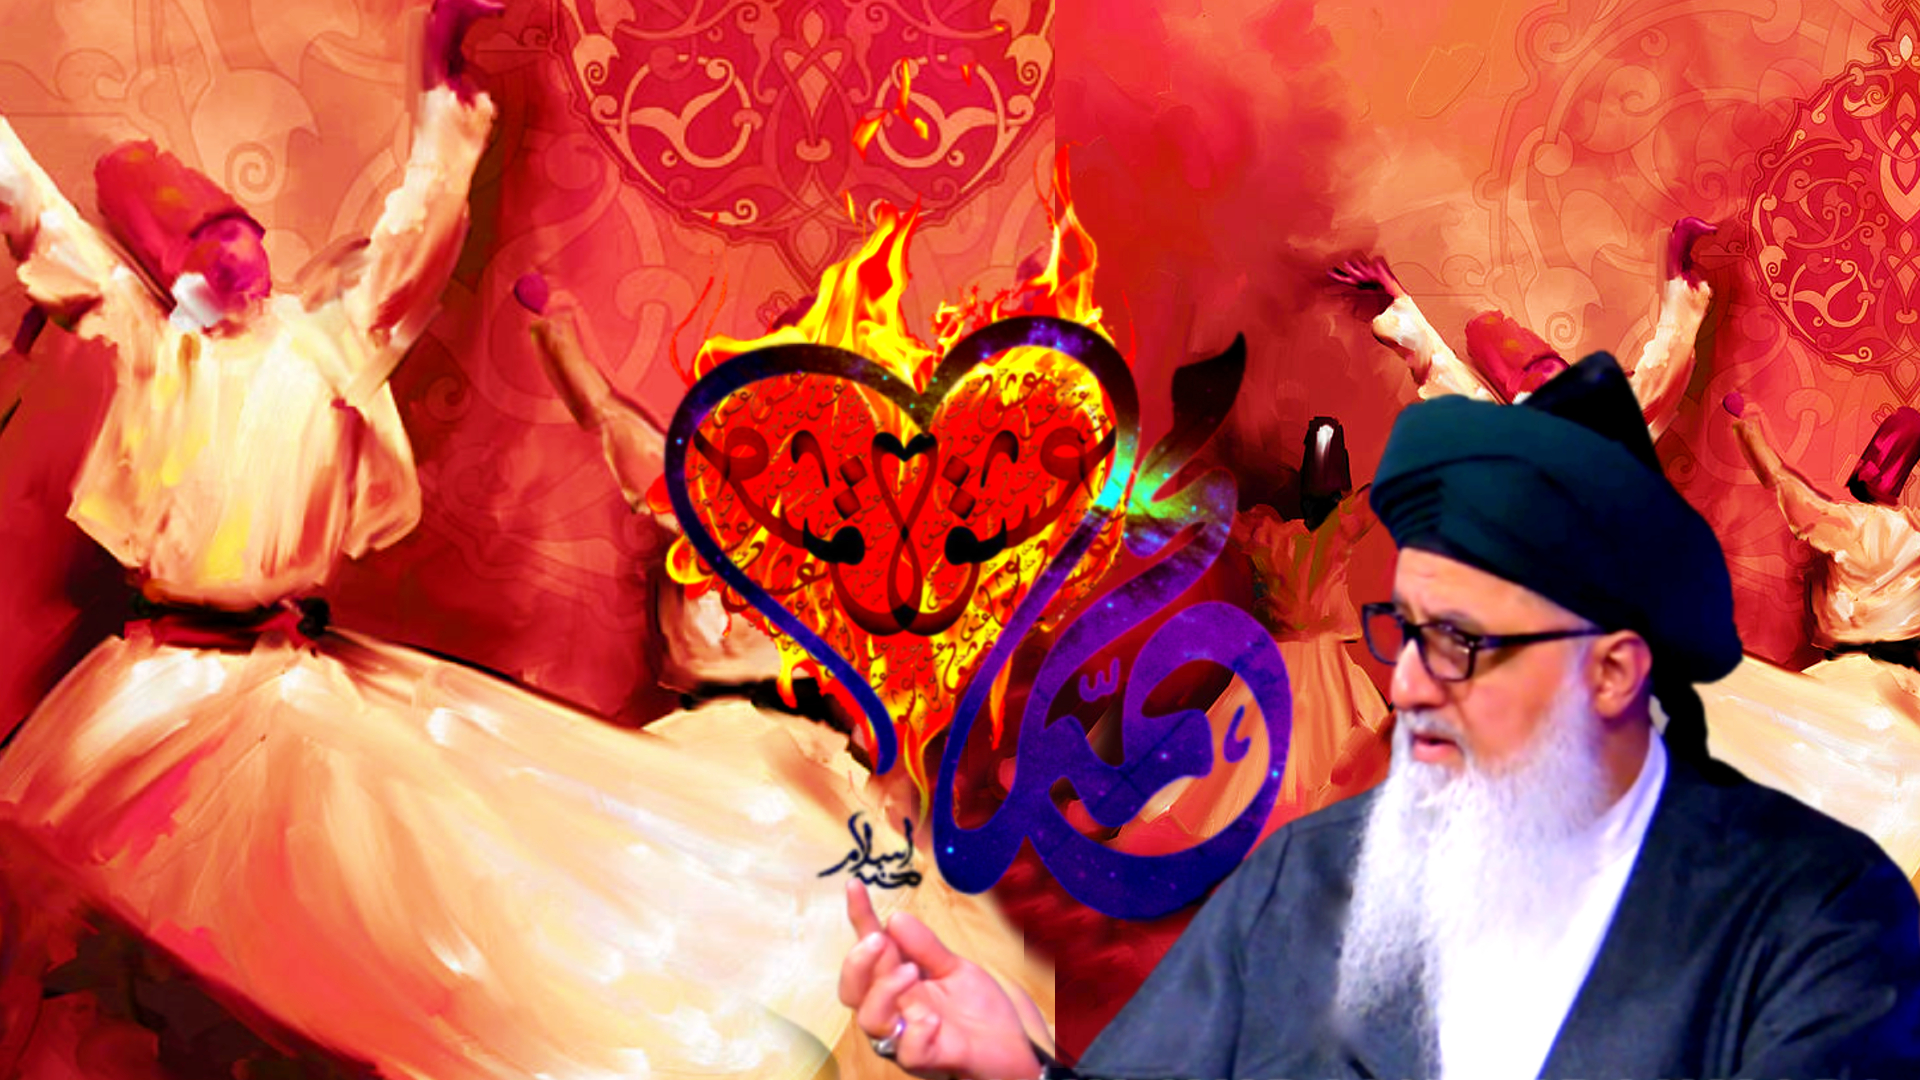 Shaykh Nurjan Mirahmadi, fire of faith,ishq, muhammad, heart on fire, whilring dervish